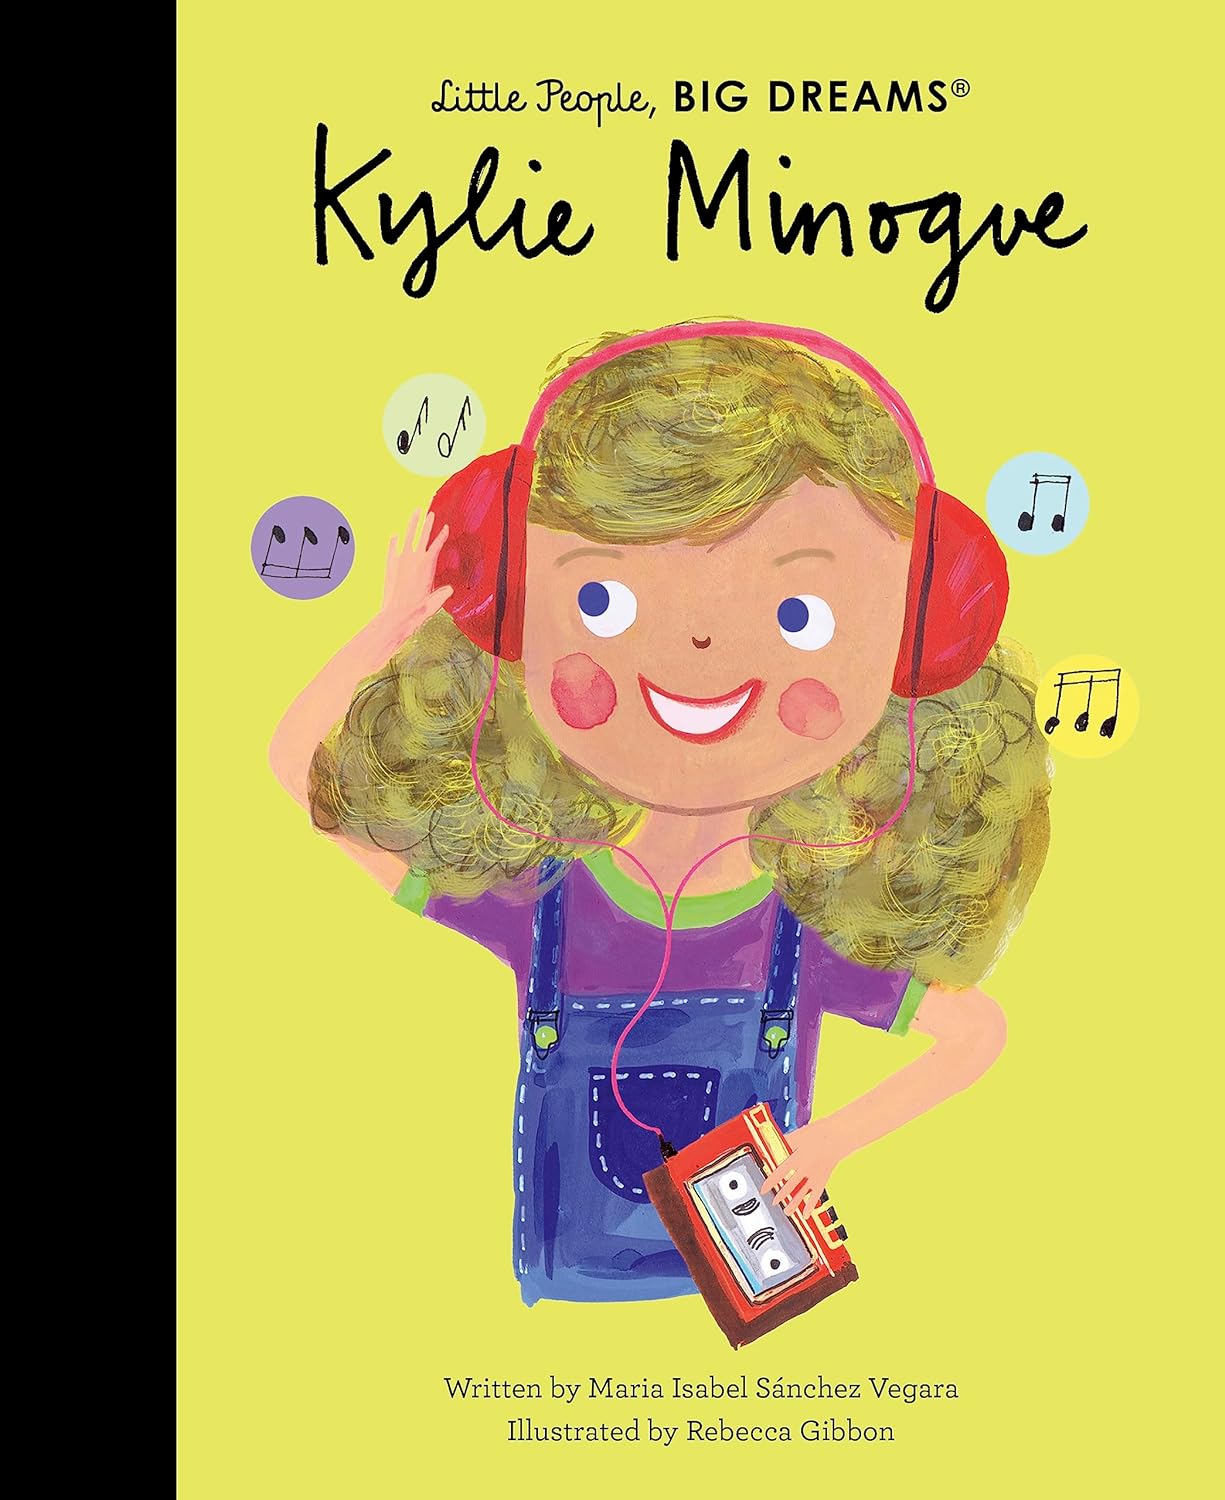 Little People Big Dreams: Kylie Minogue